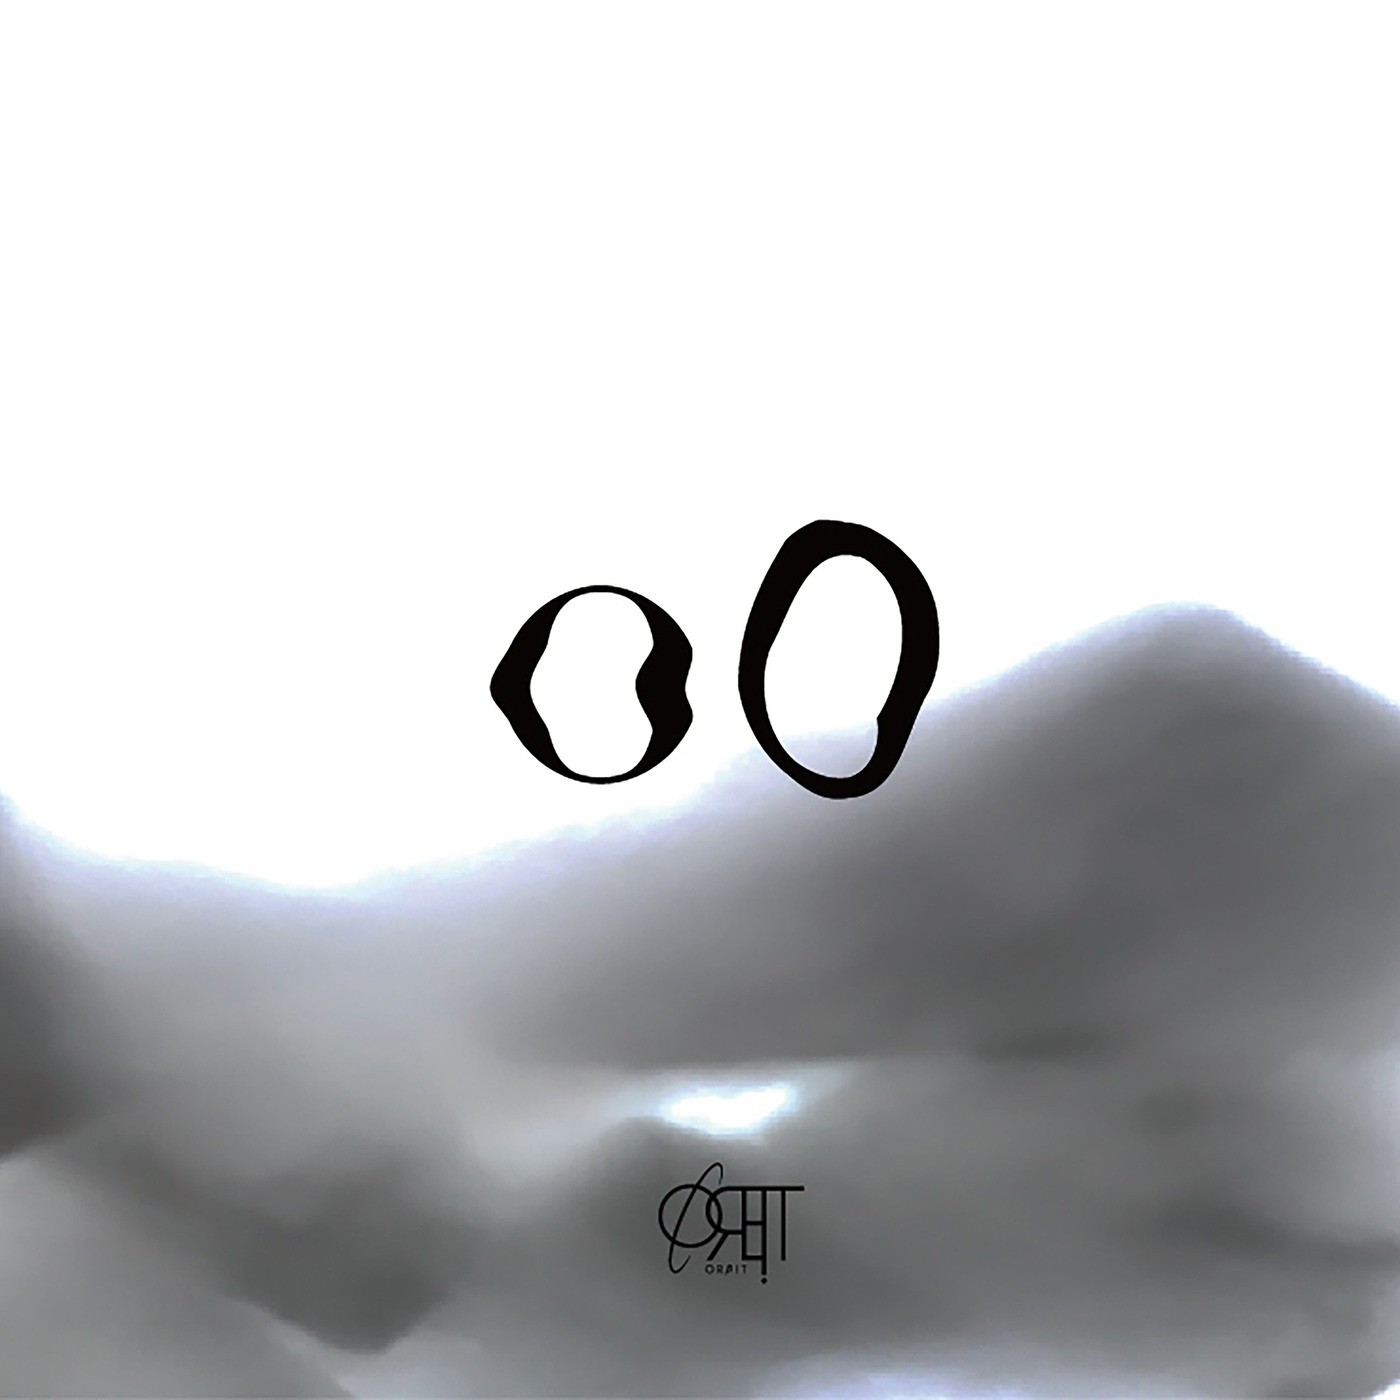 ORBIT – 00 [FLAC + MP3 320 / WEB] [2020.11.11]